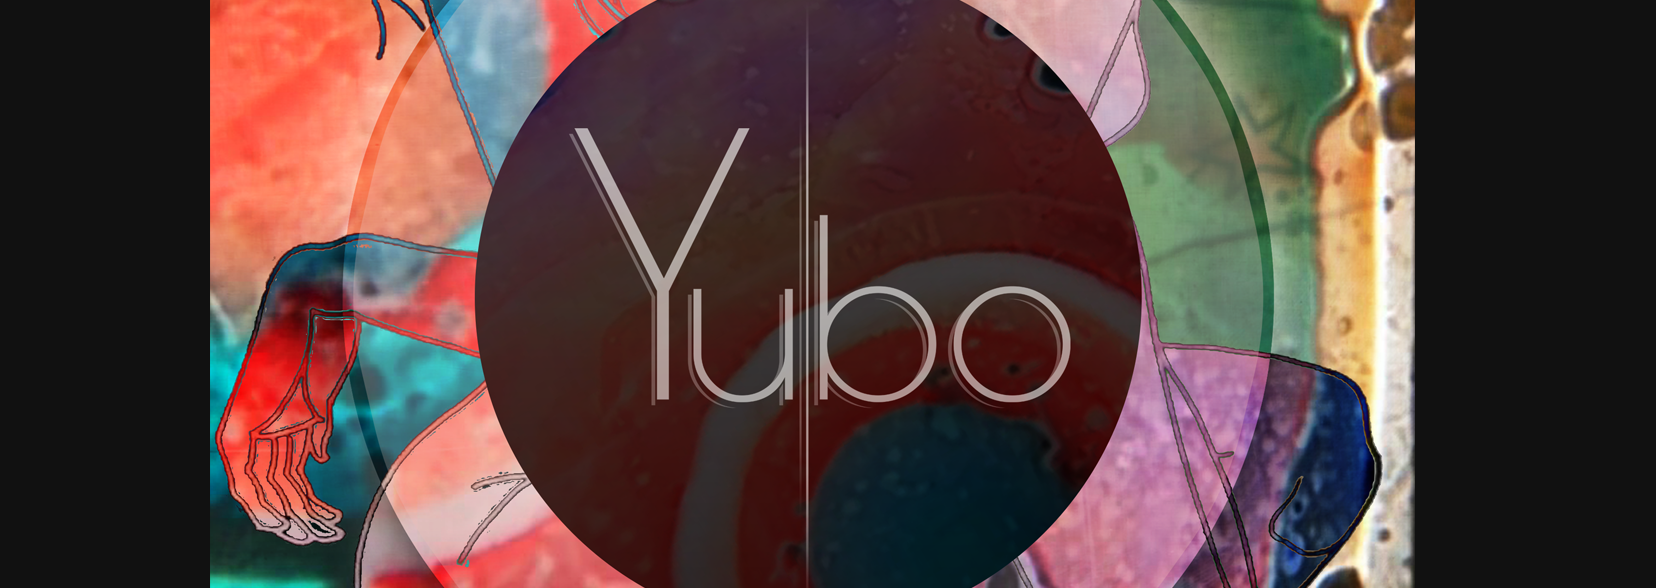 Yubo UnterRock